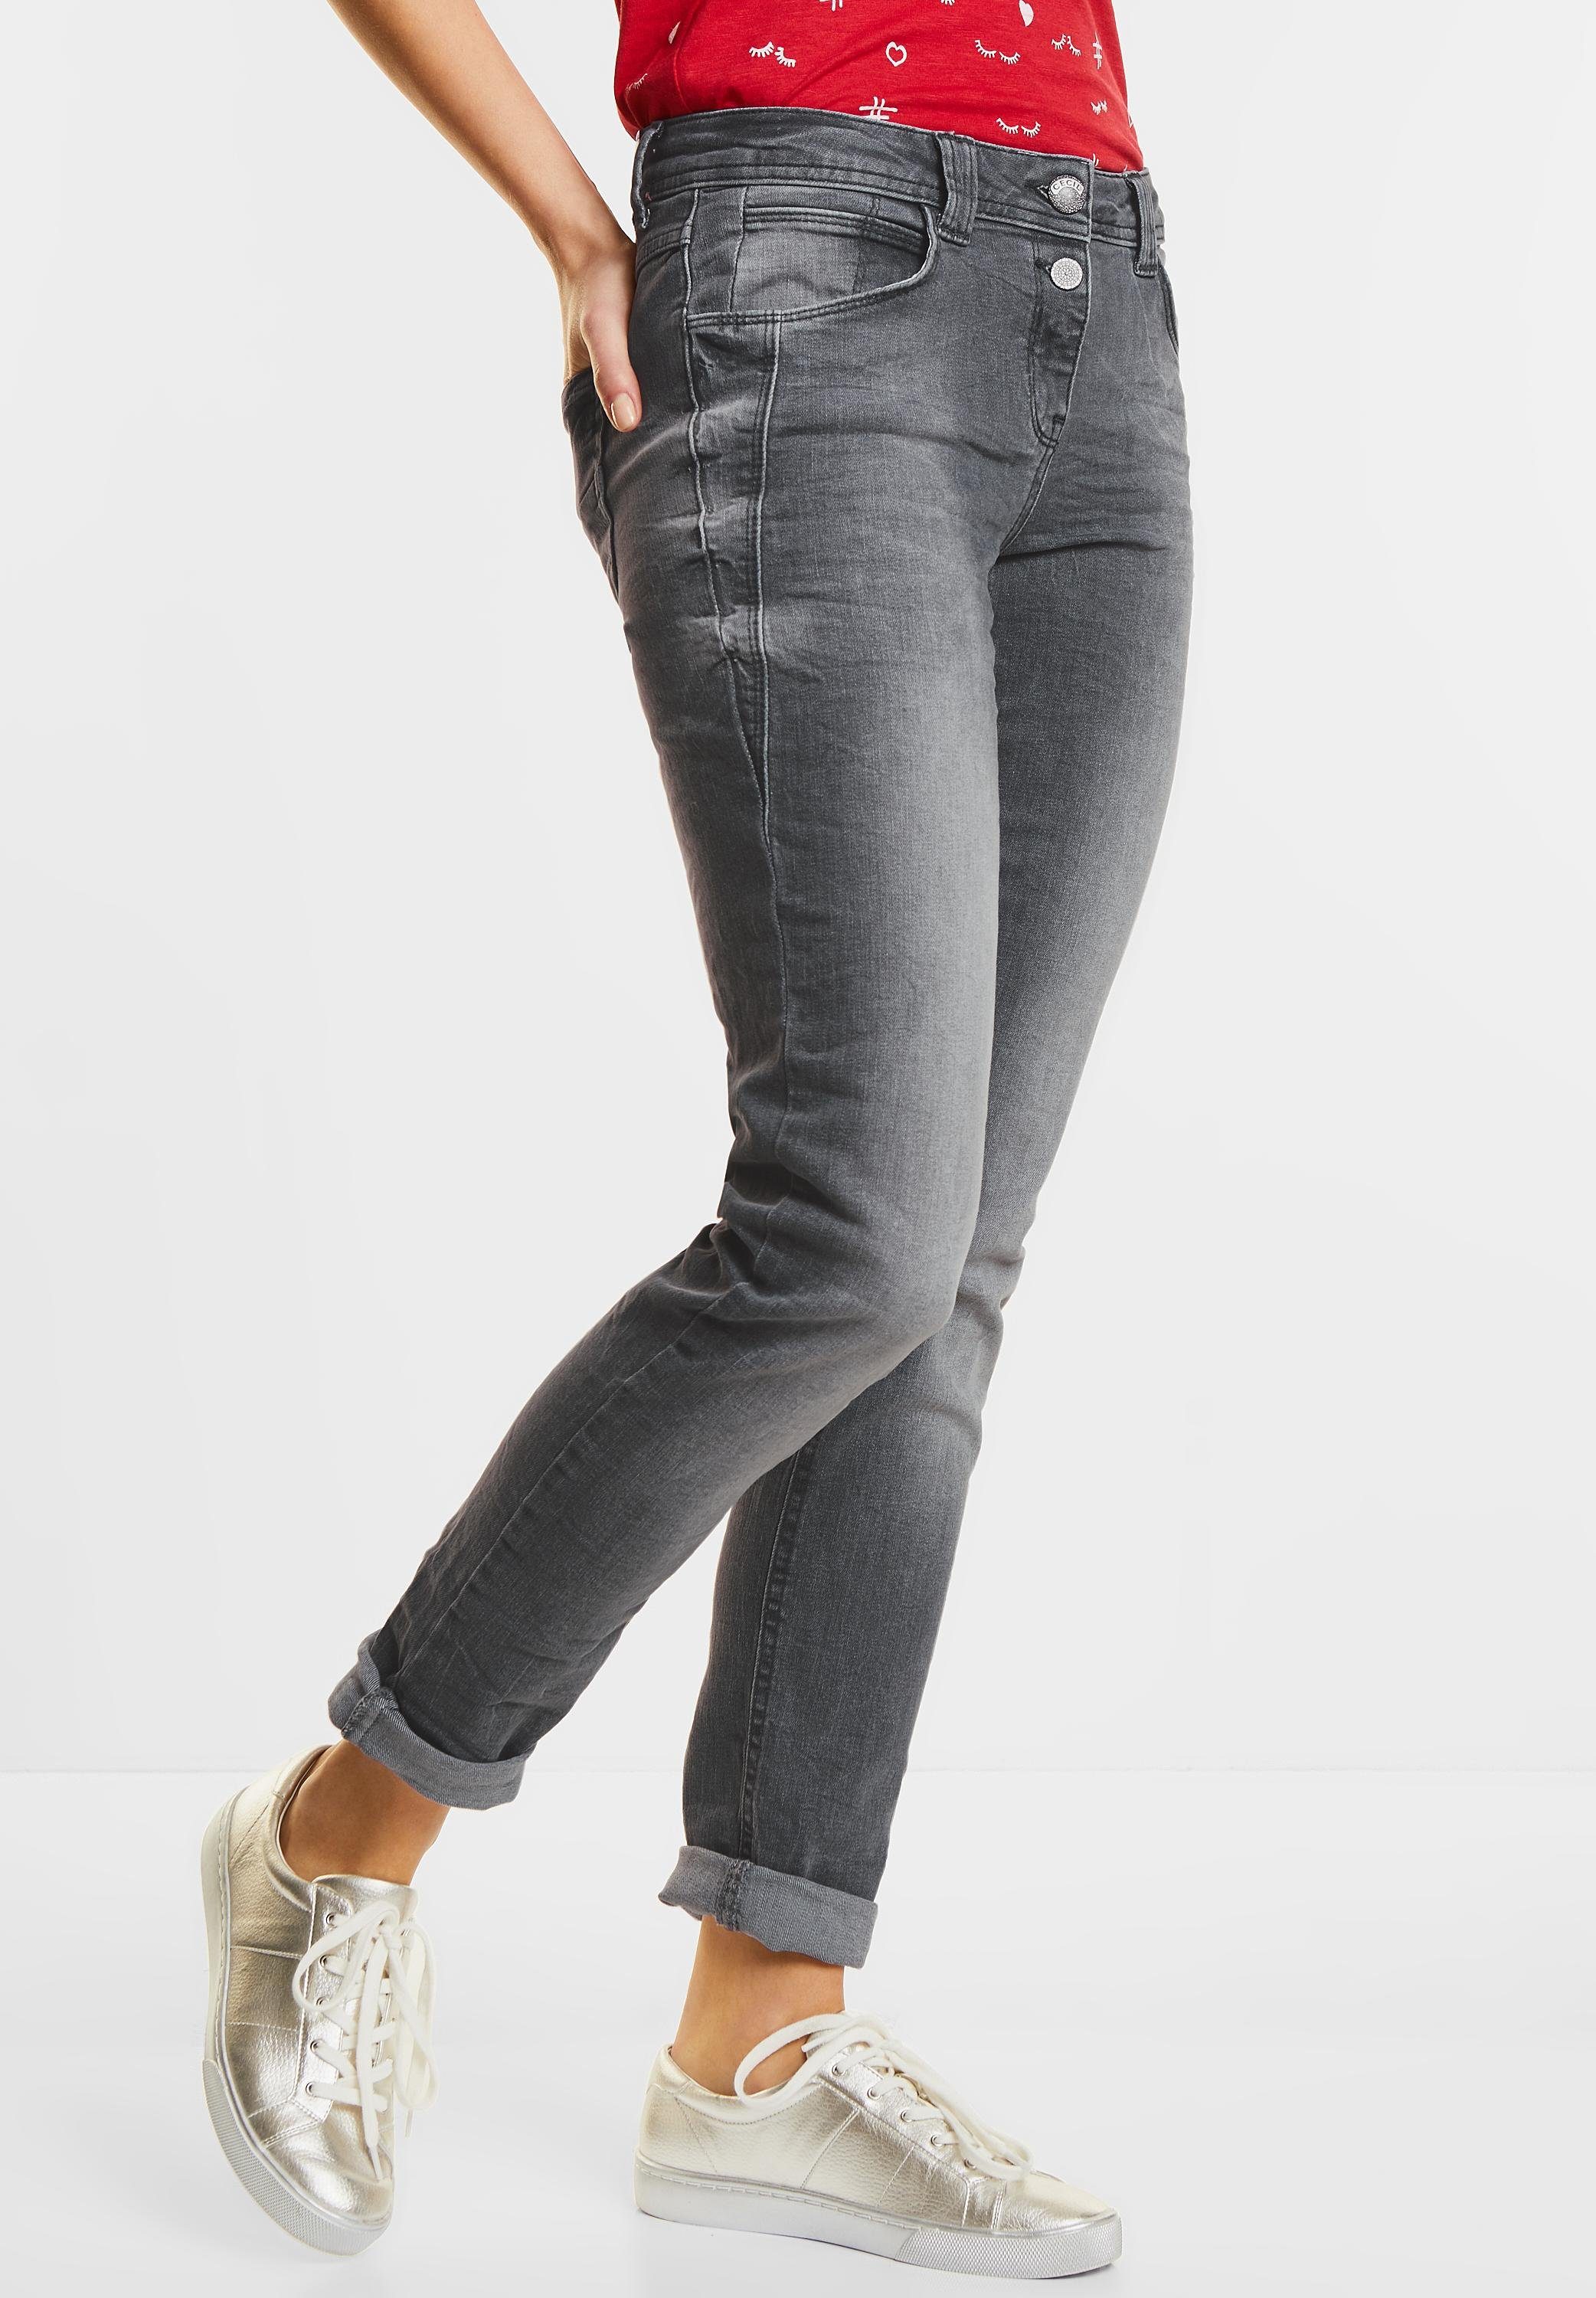 Otto - Cecil NU 15% KORTING: CECIL Grijze jeans Scarlett